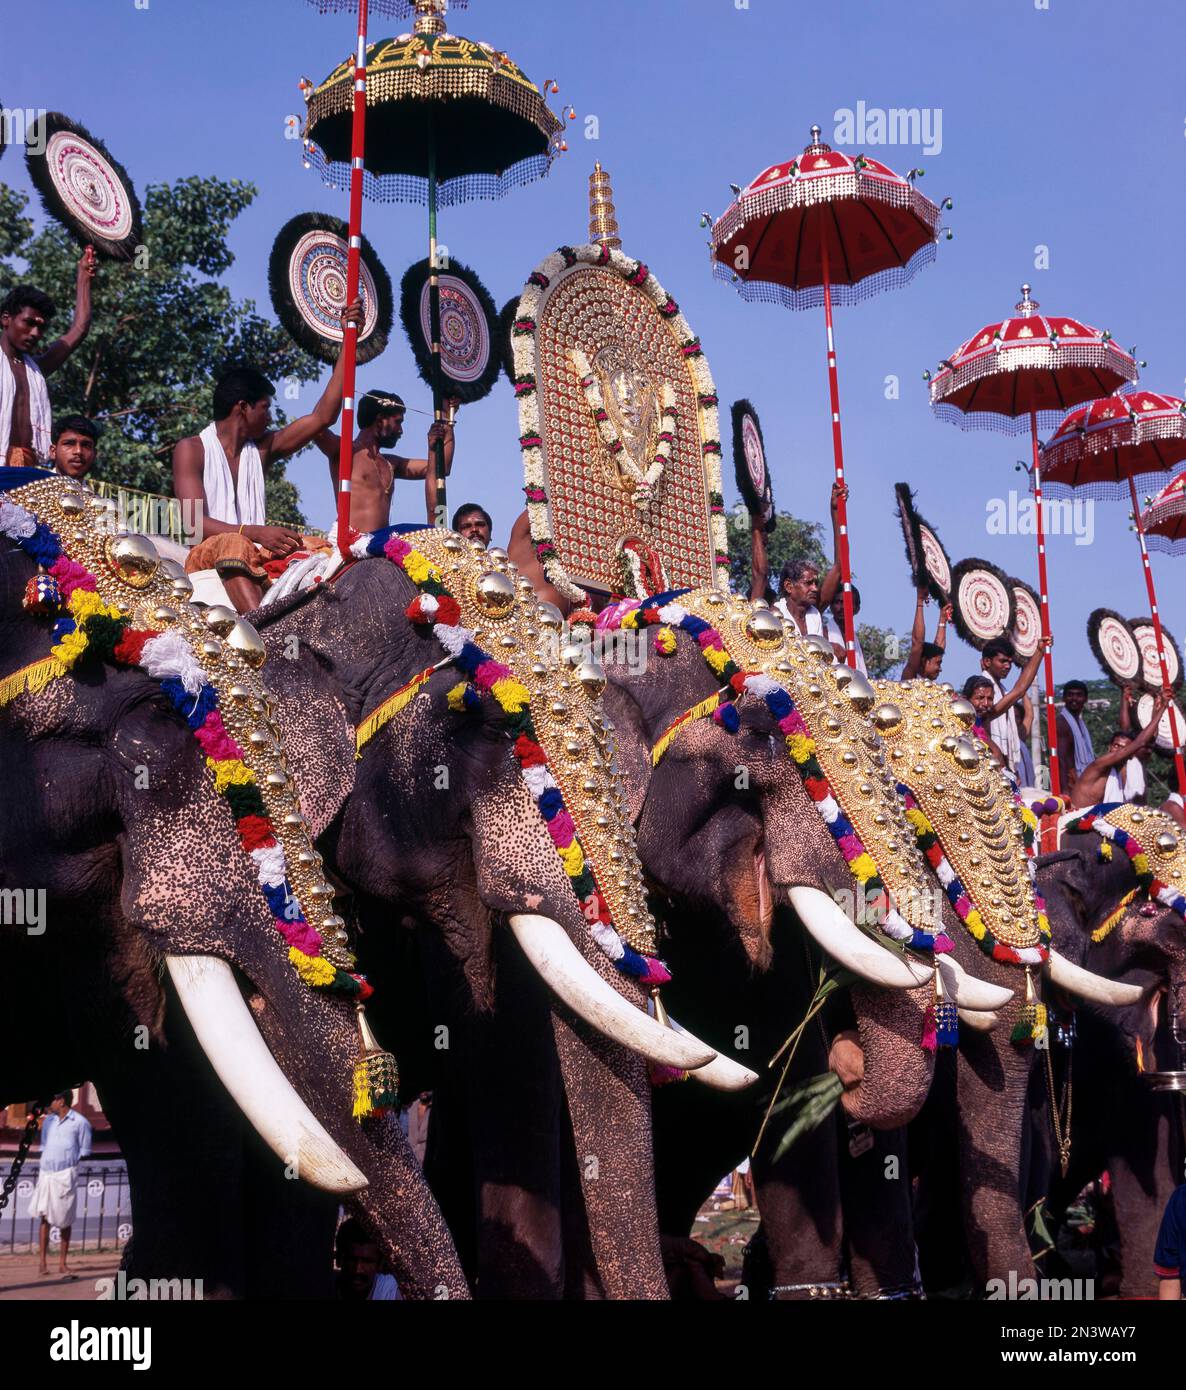 Caparisoned elephants in Pooram festival, Thrissur or Trichur, Kerala, India, Asia Stock Photo